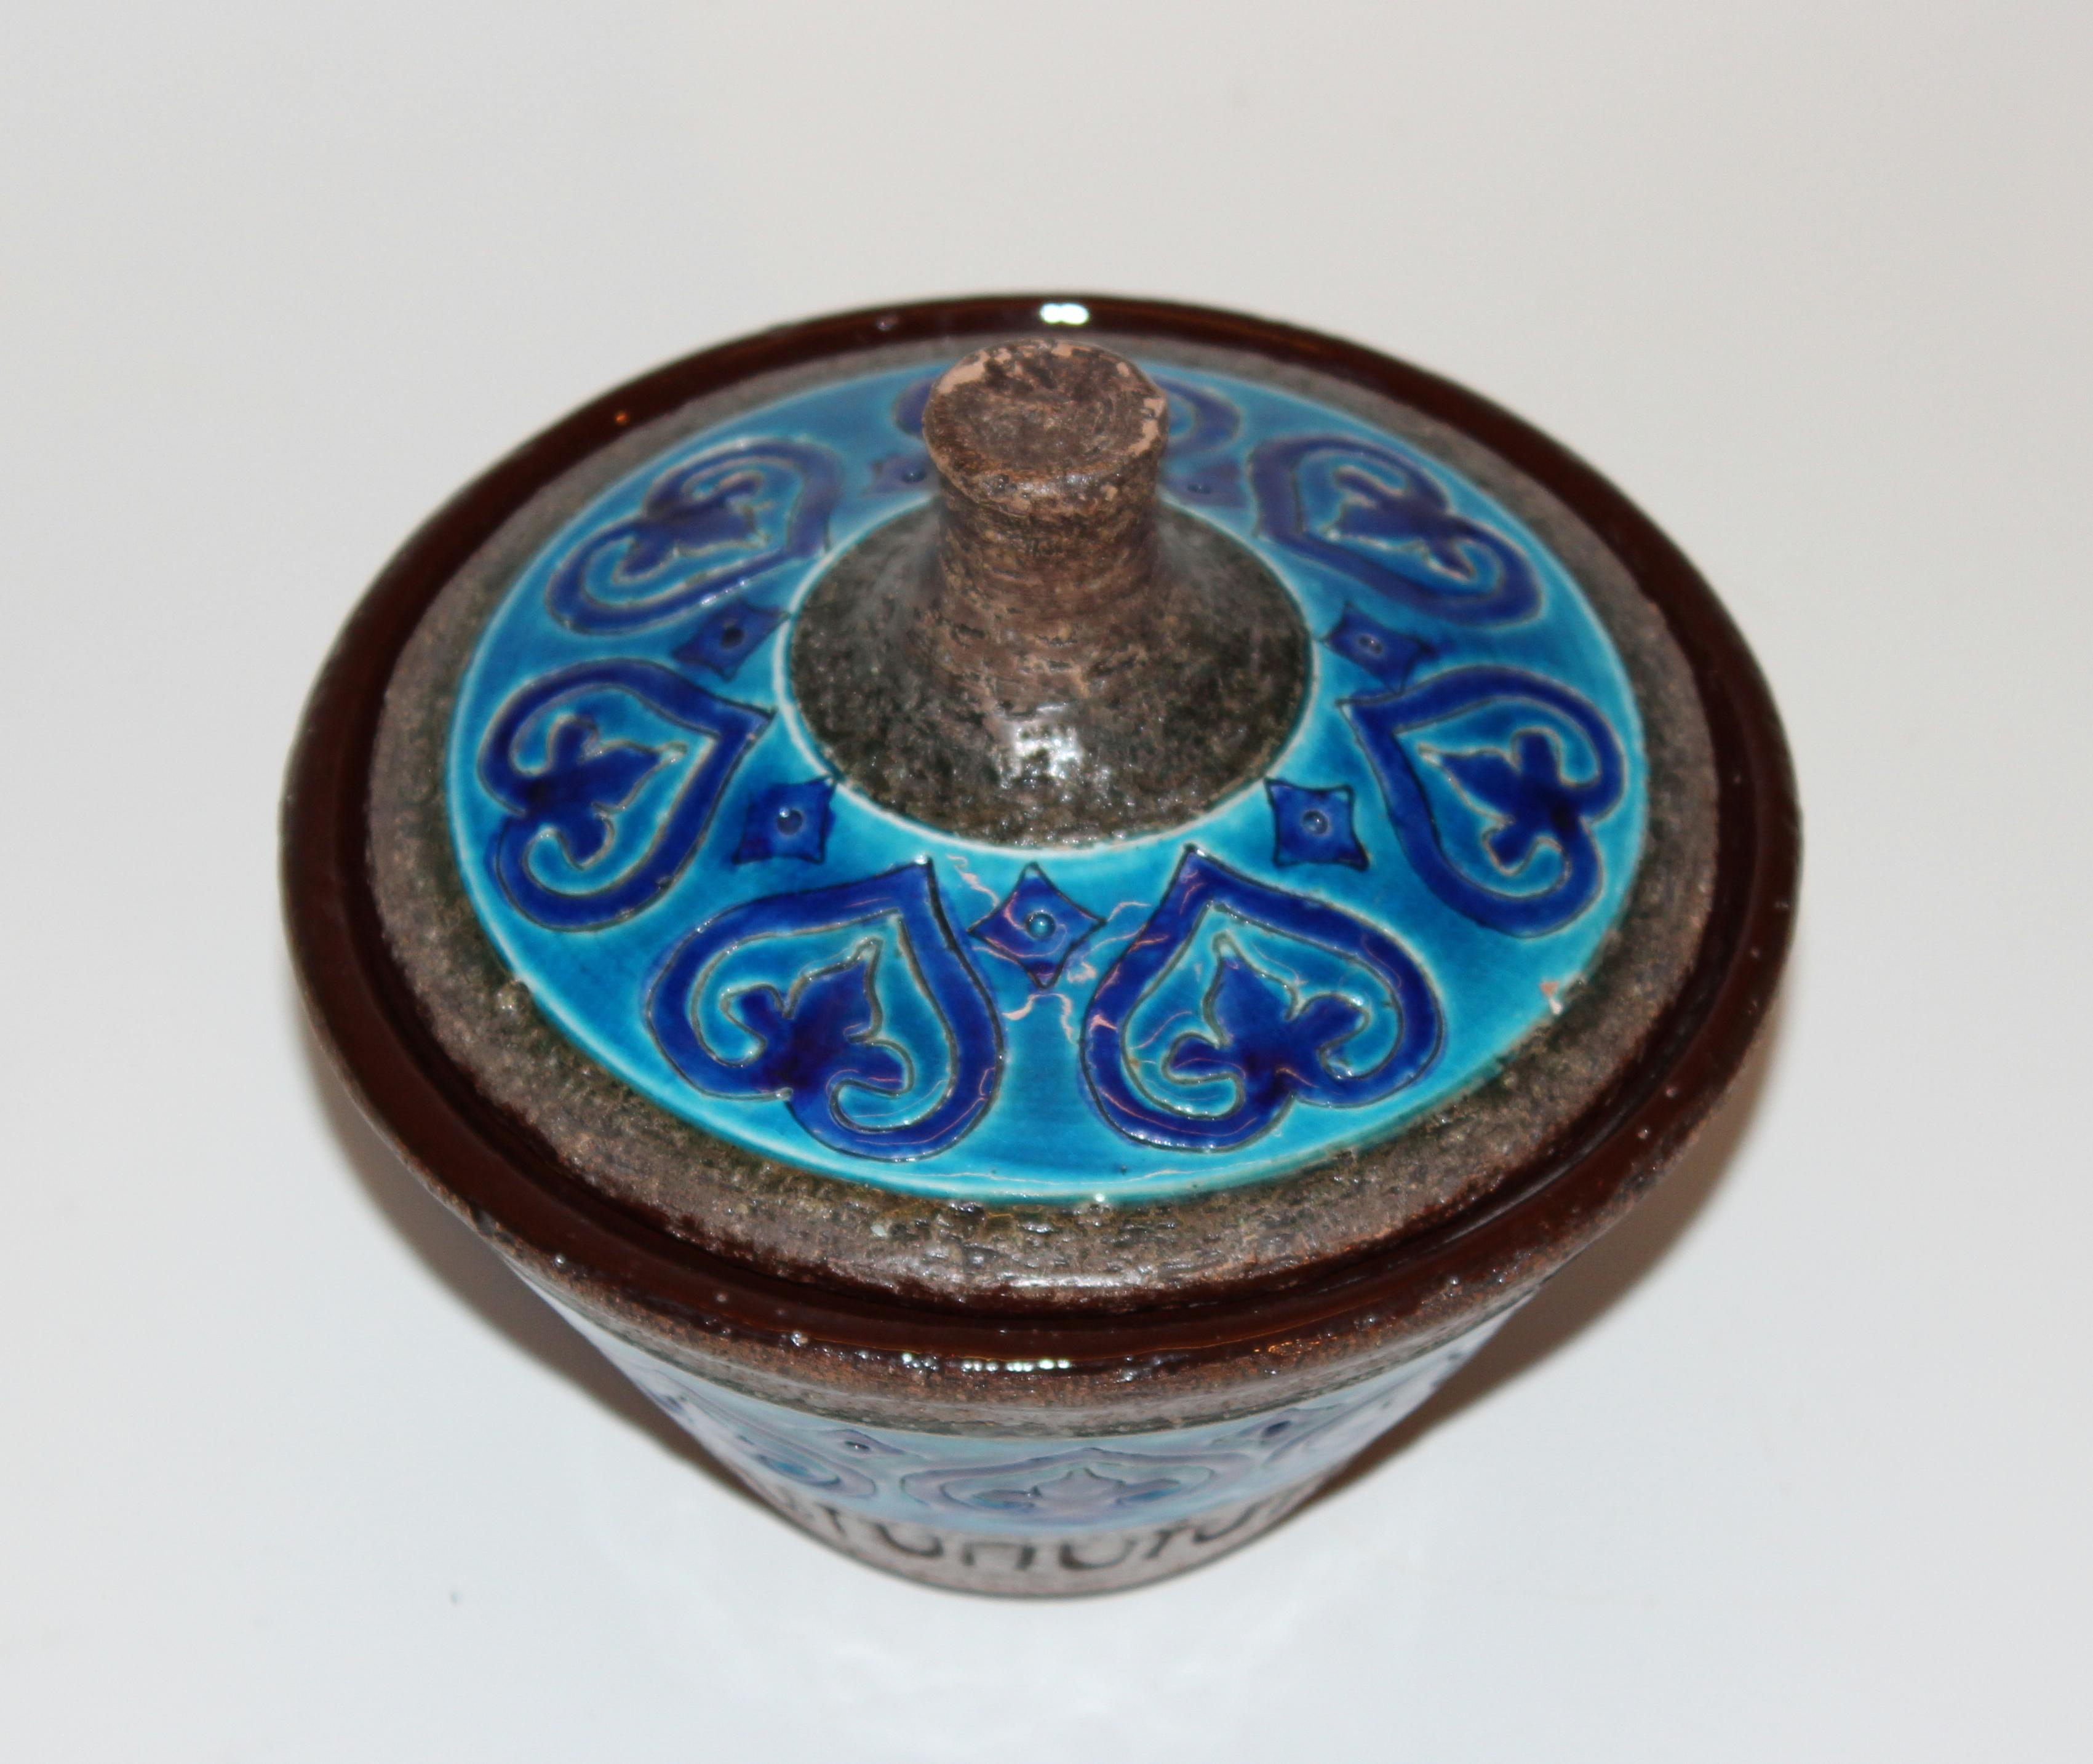 Turned Bitossi Italian Pottery Raymor Jar and Cover Vintage Rimini Blue Londi Ceramic